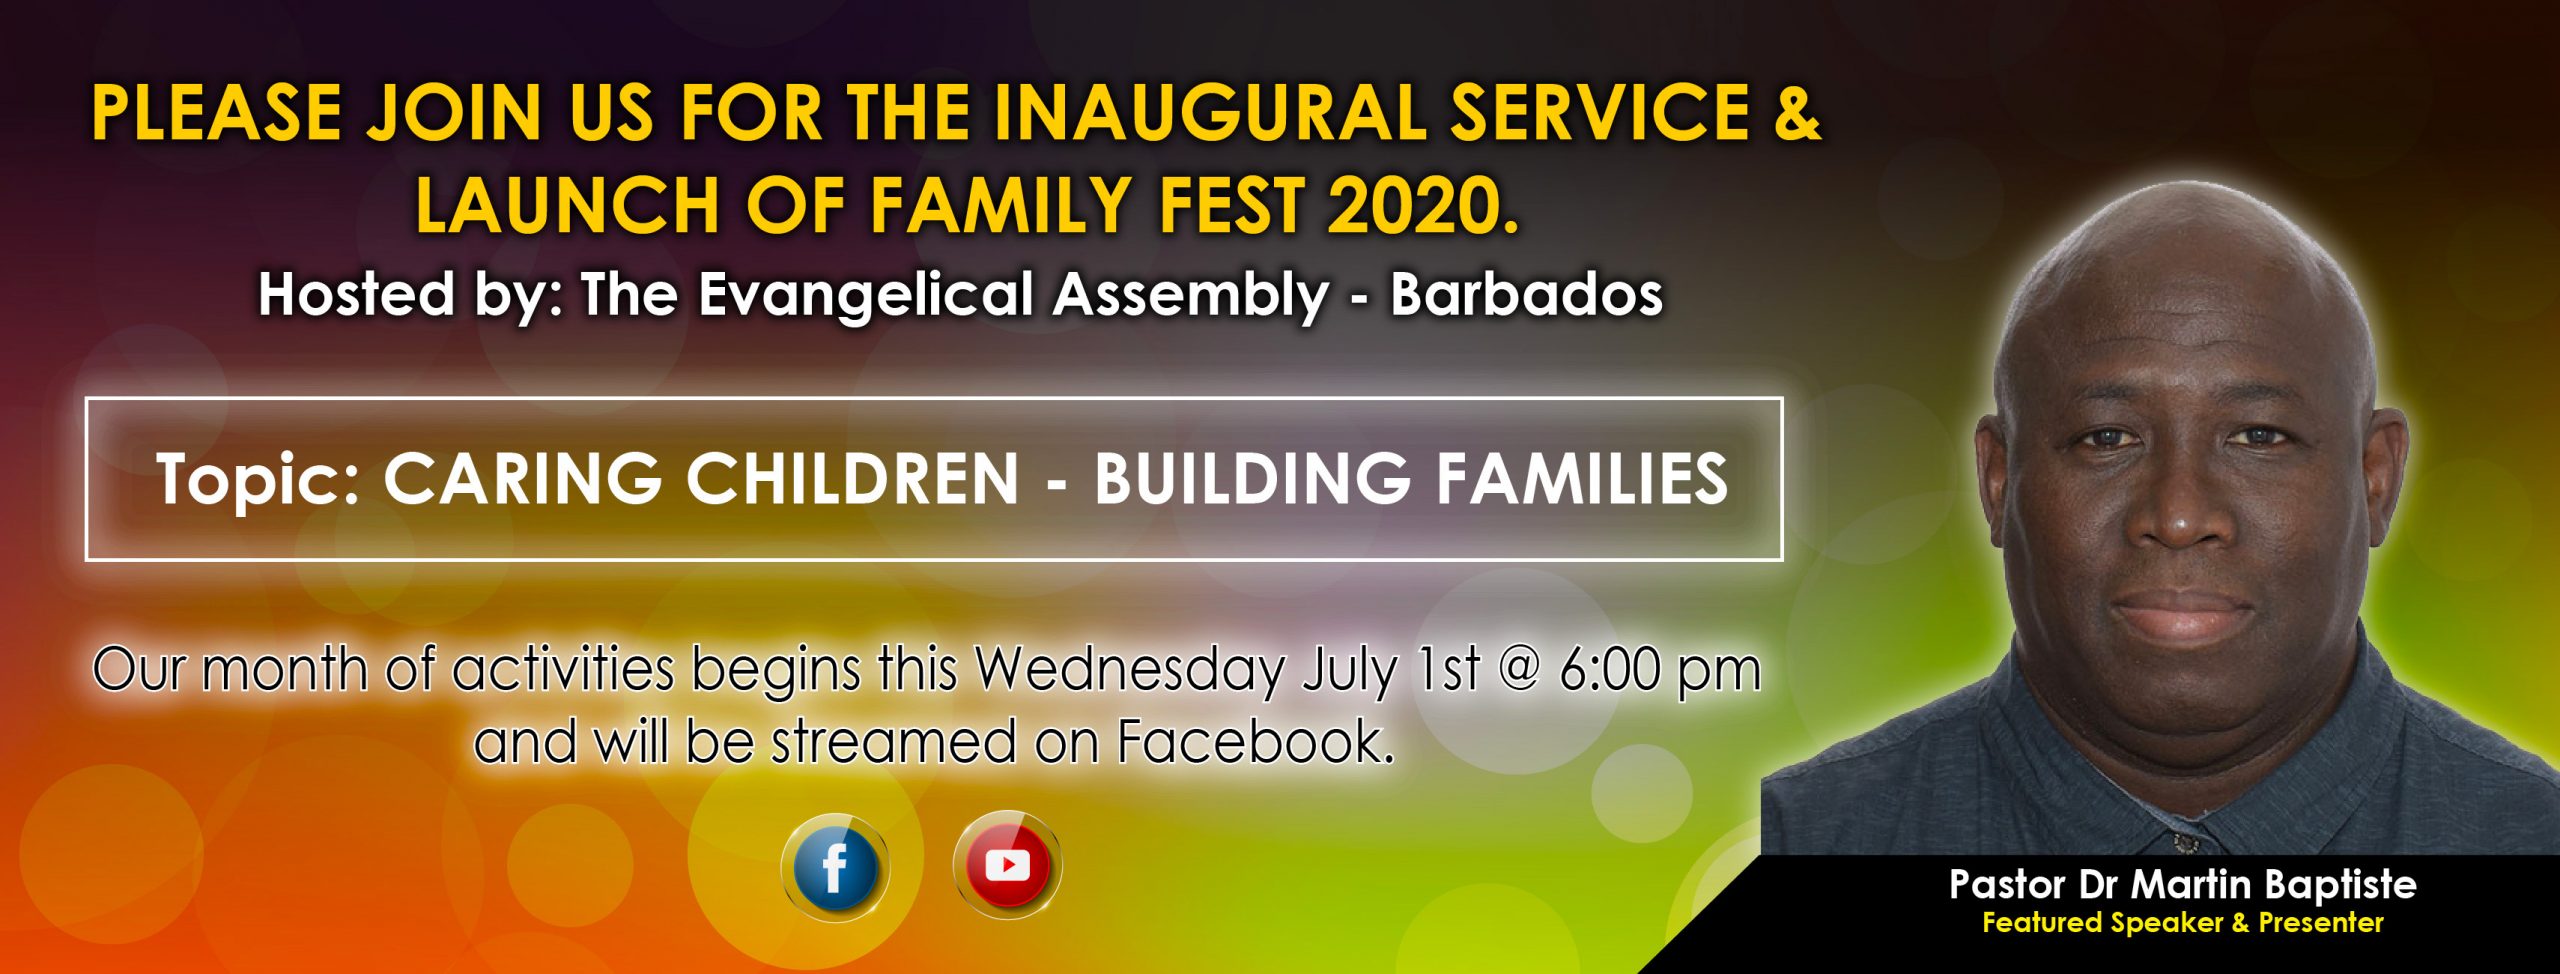 Family Fest inaugural church service